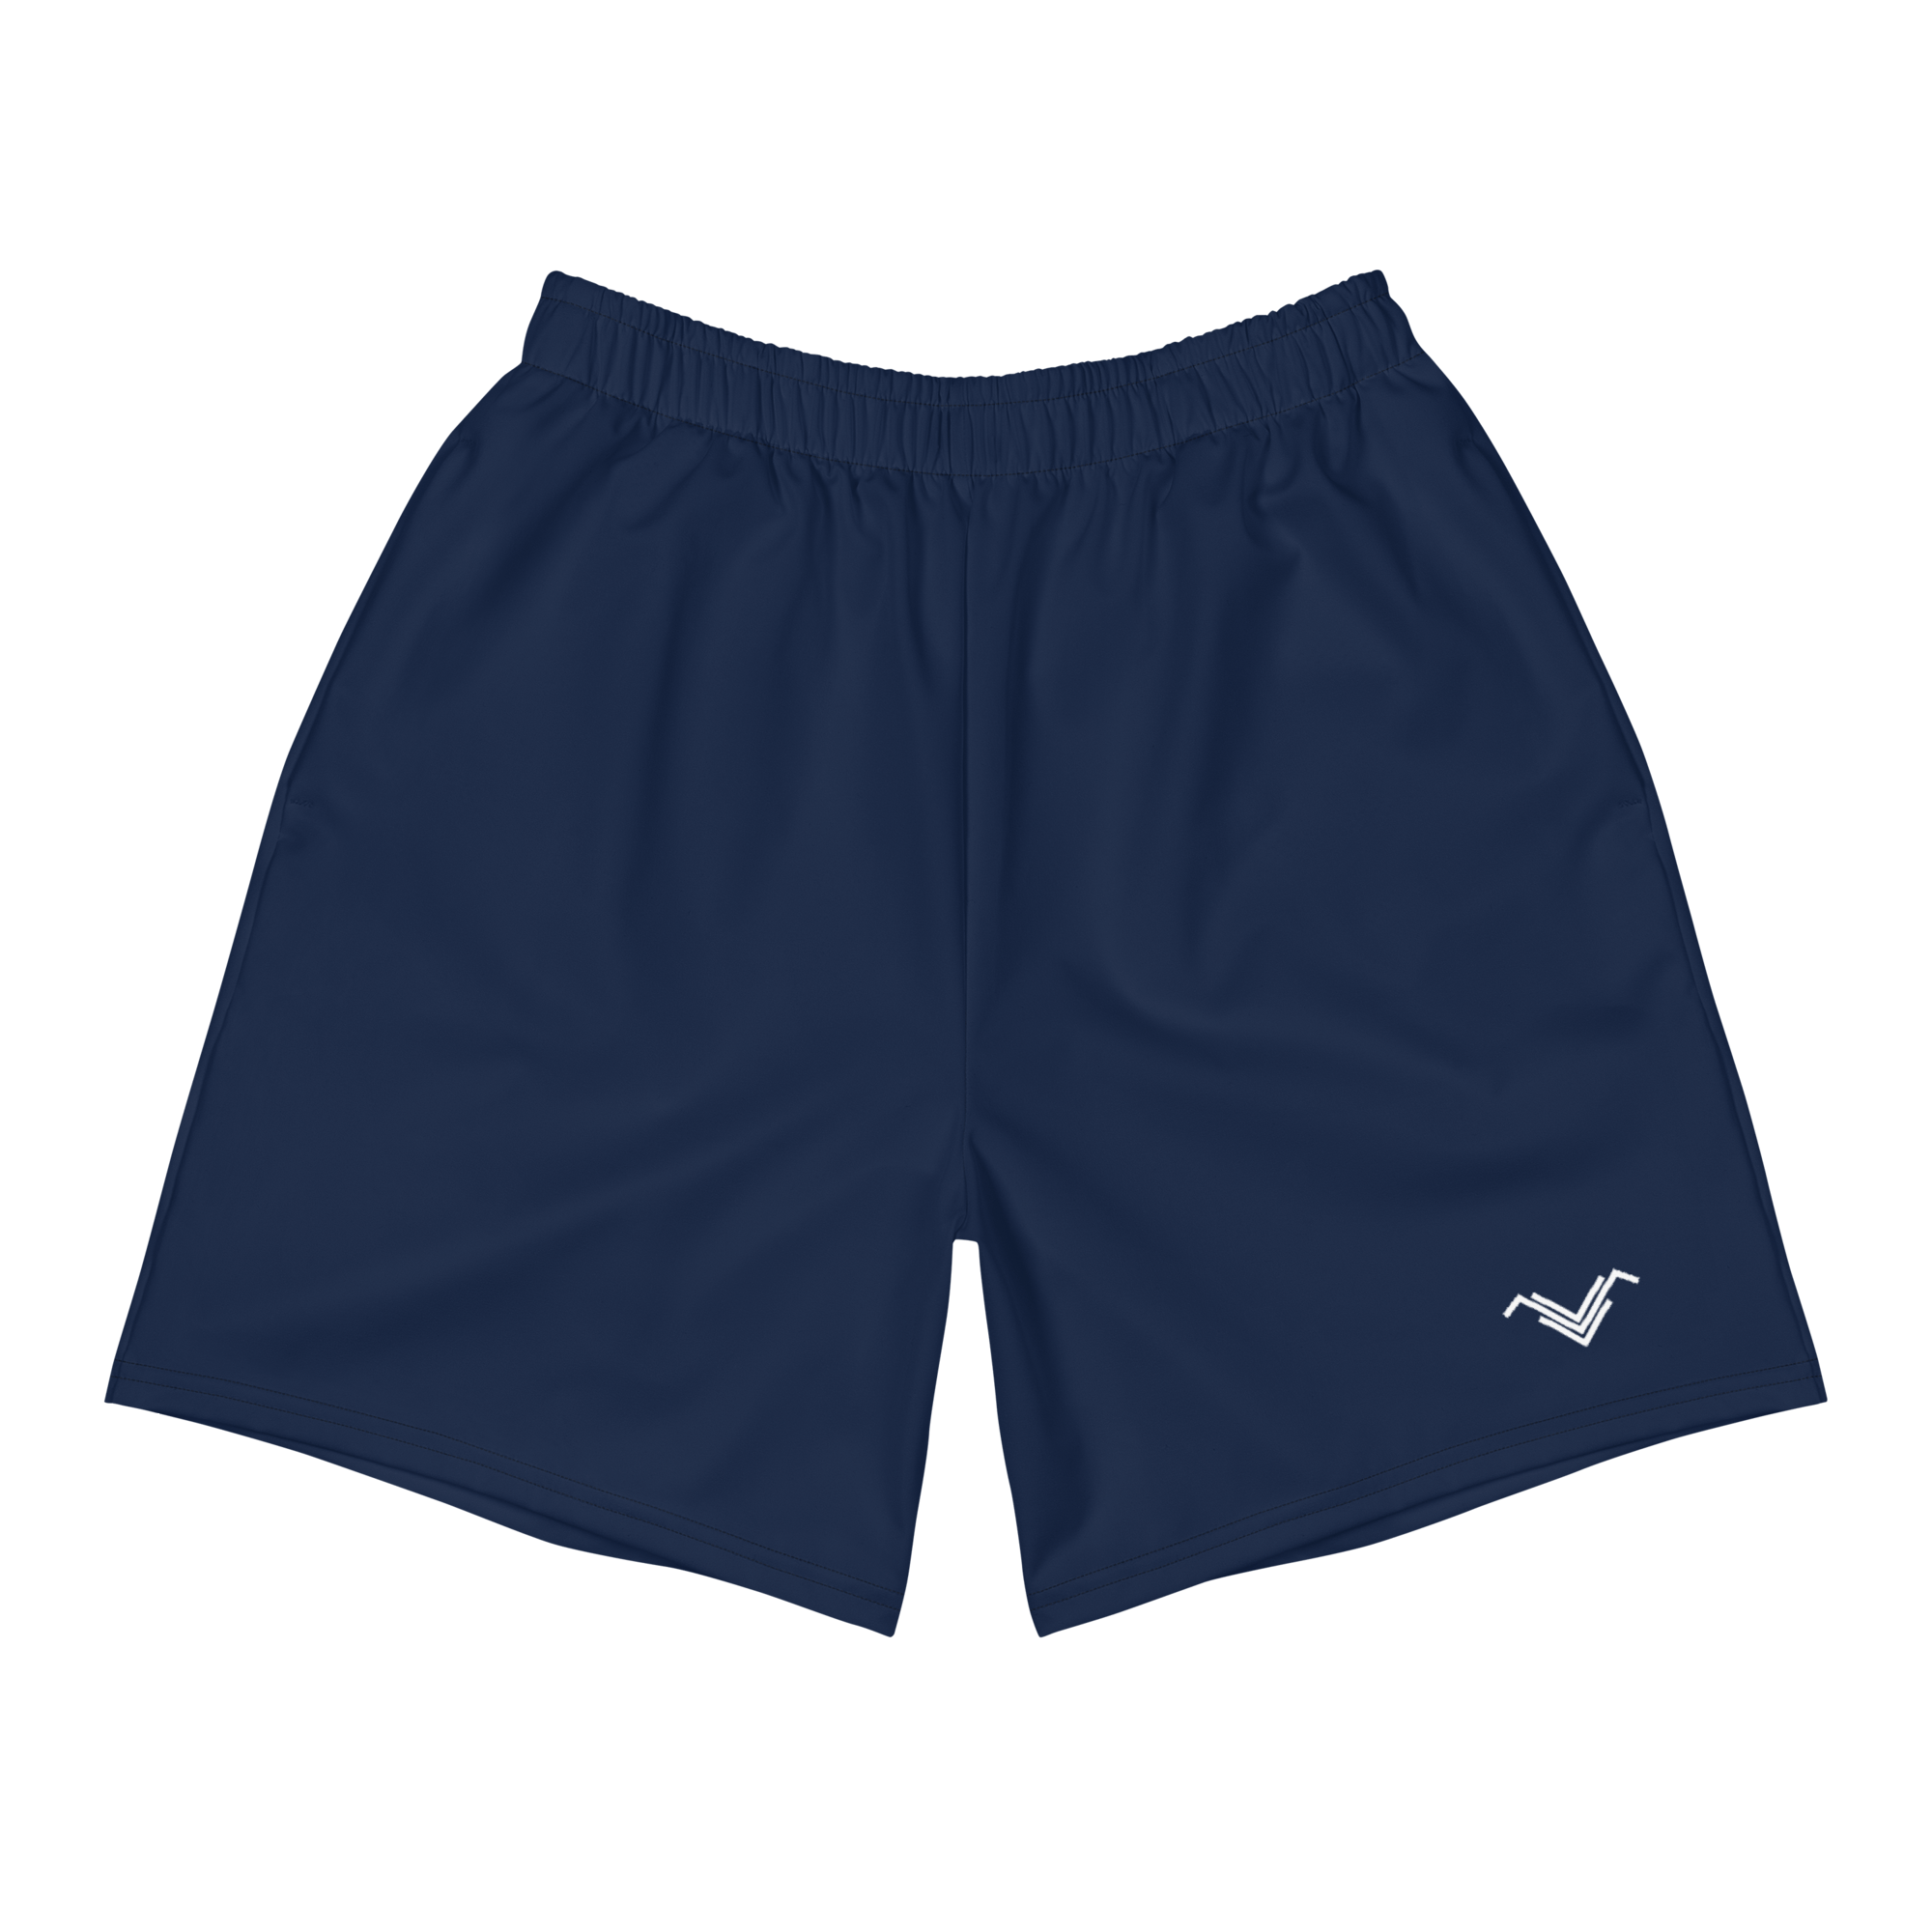 Recycled Athletic Shorts - Navy - FormTheory Athletics